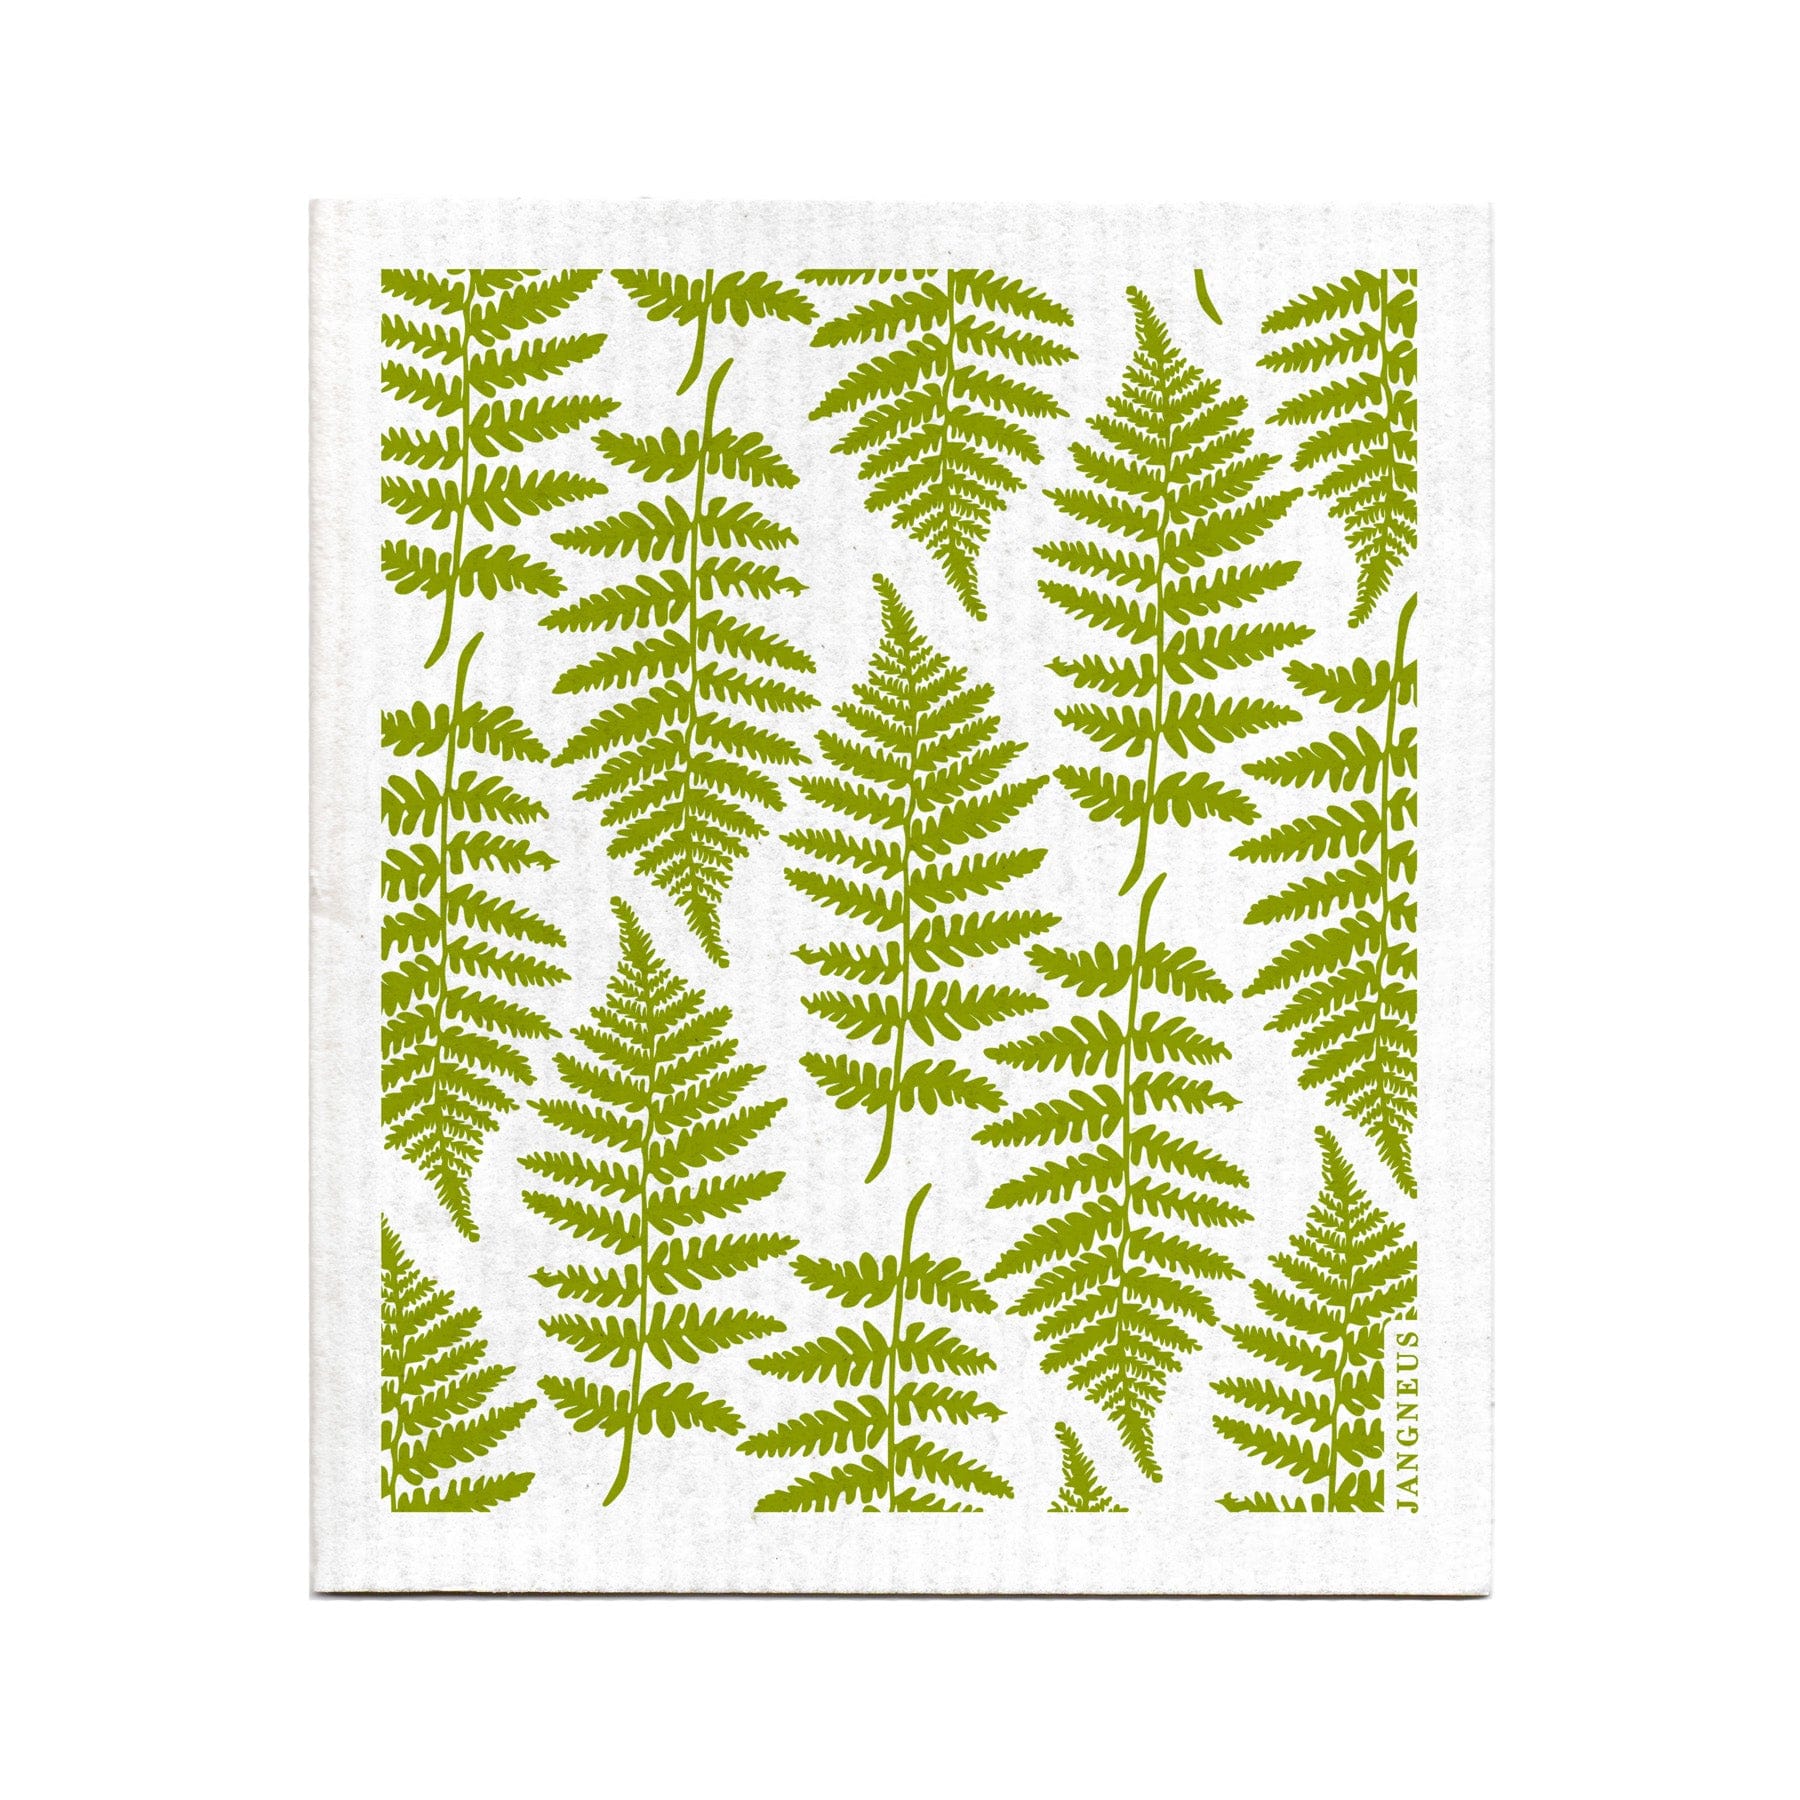 Biodegradable dishcloth - green fern